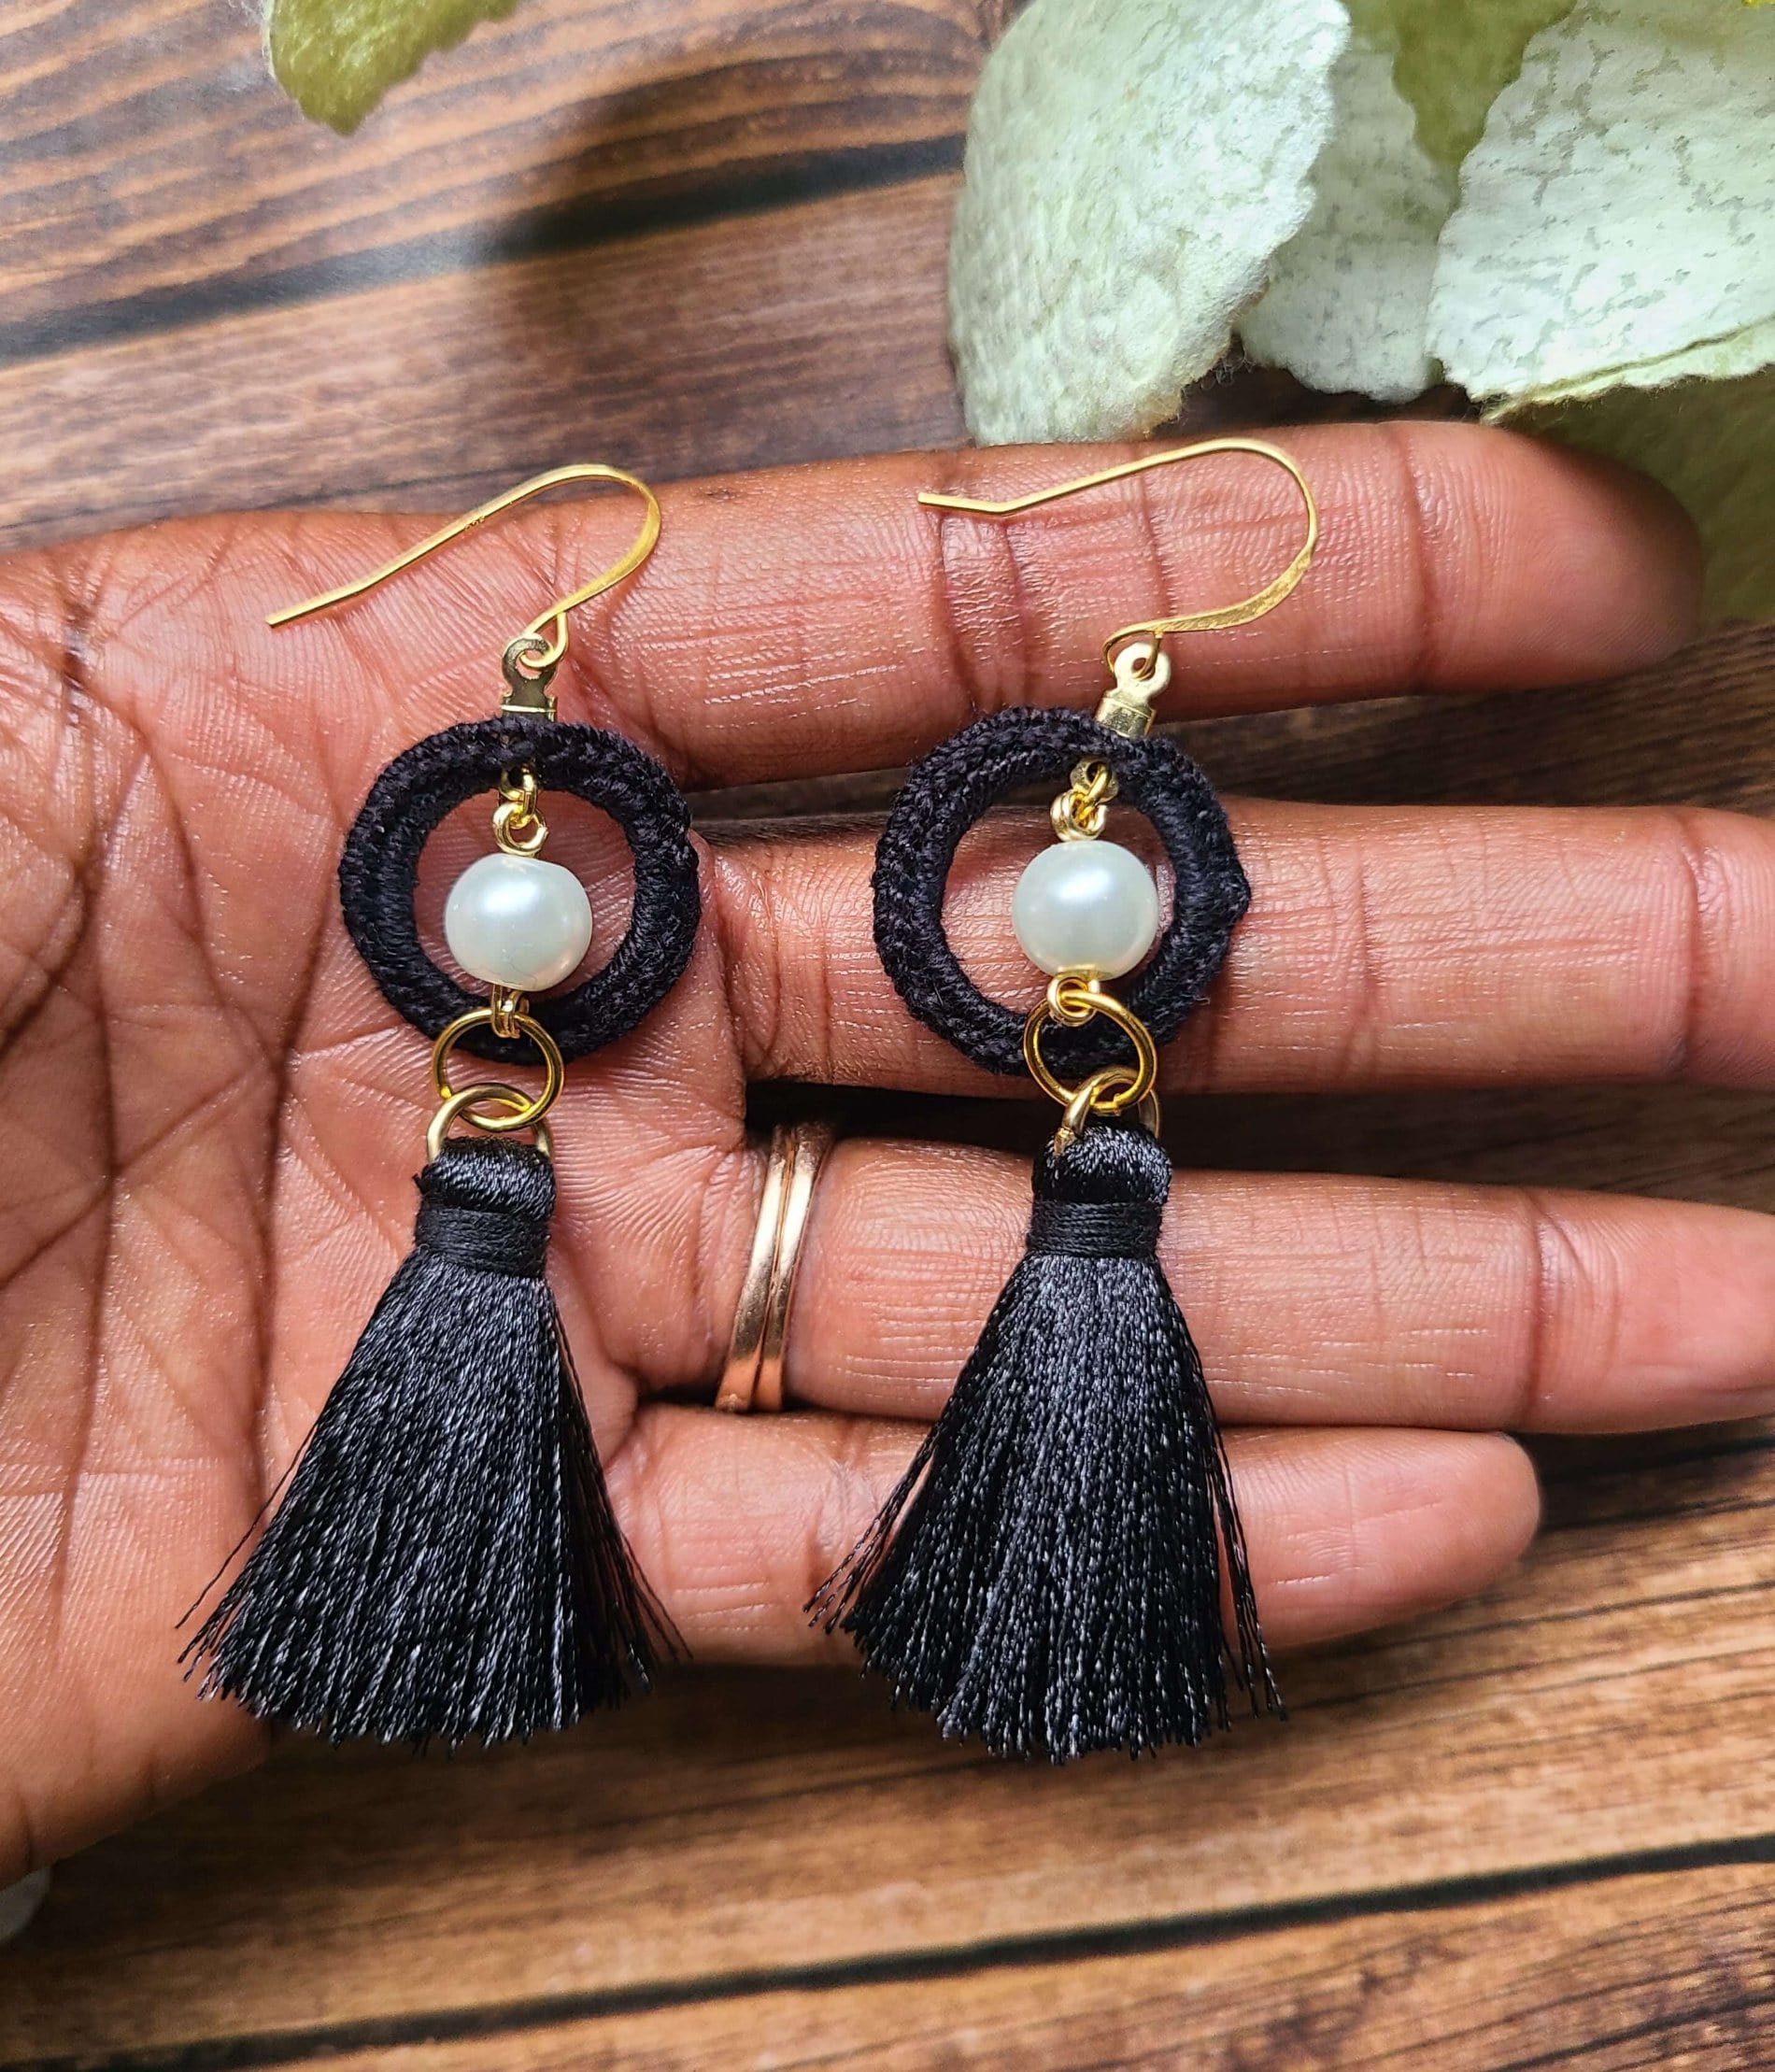 Black tassel dangle earrings